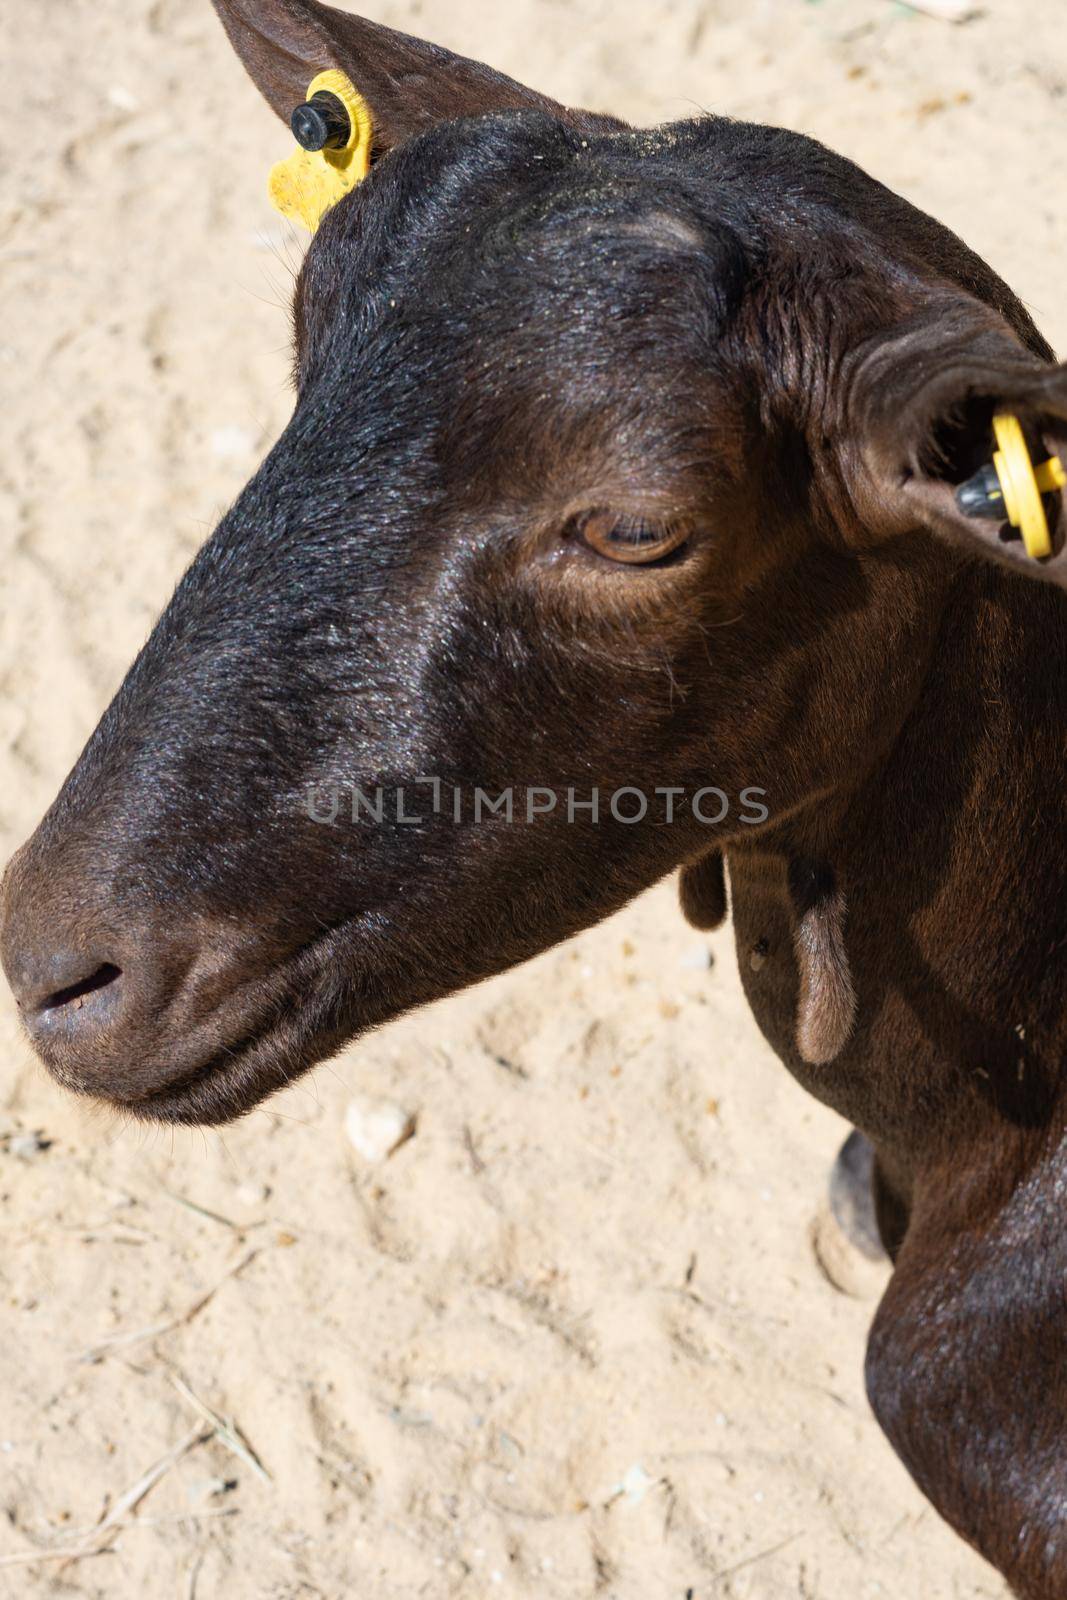 goats eating in the field by joseantona